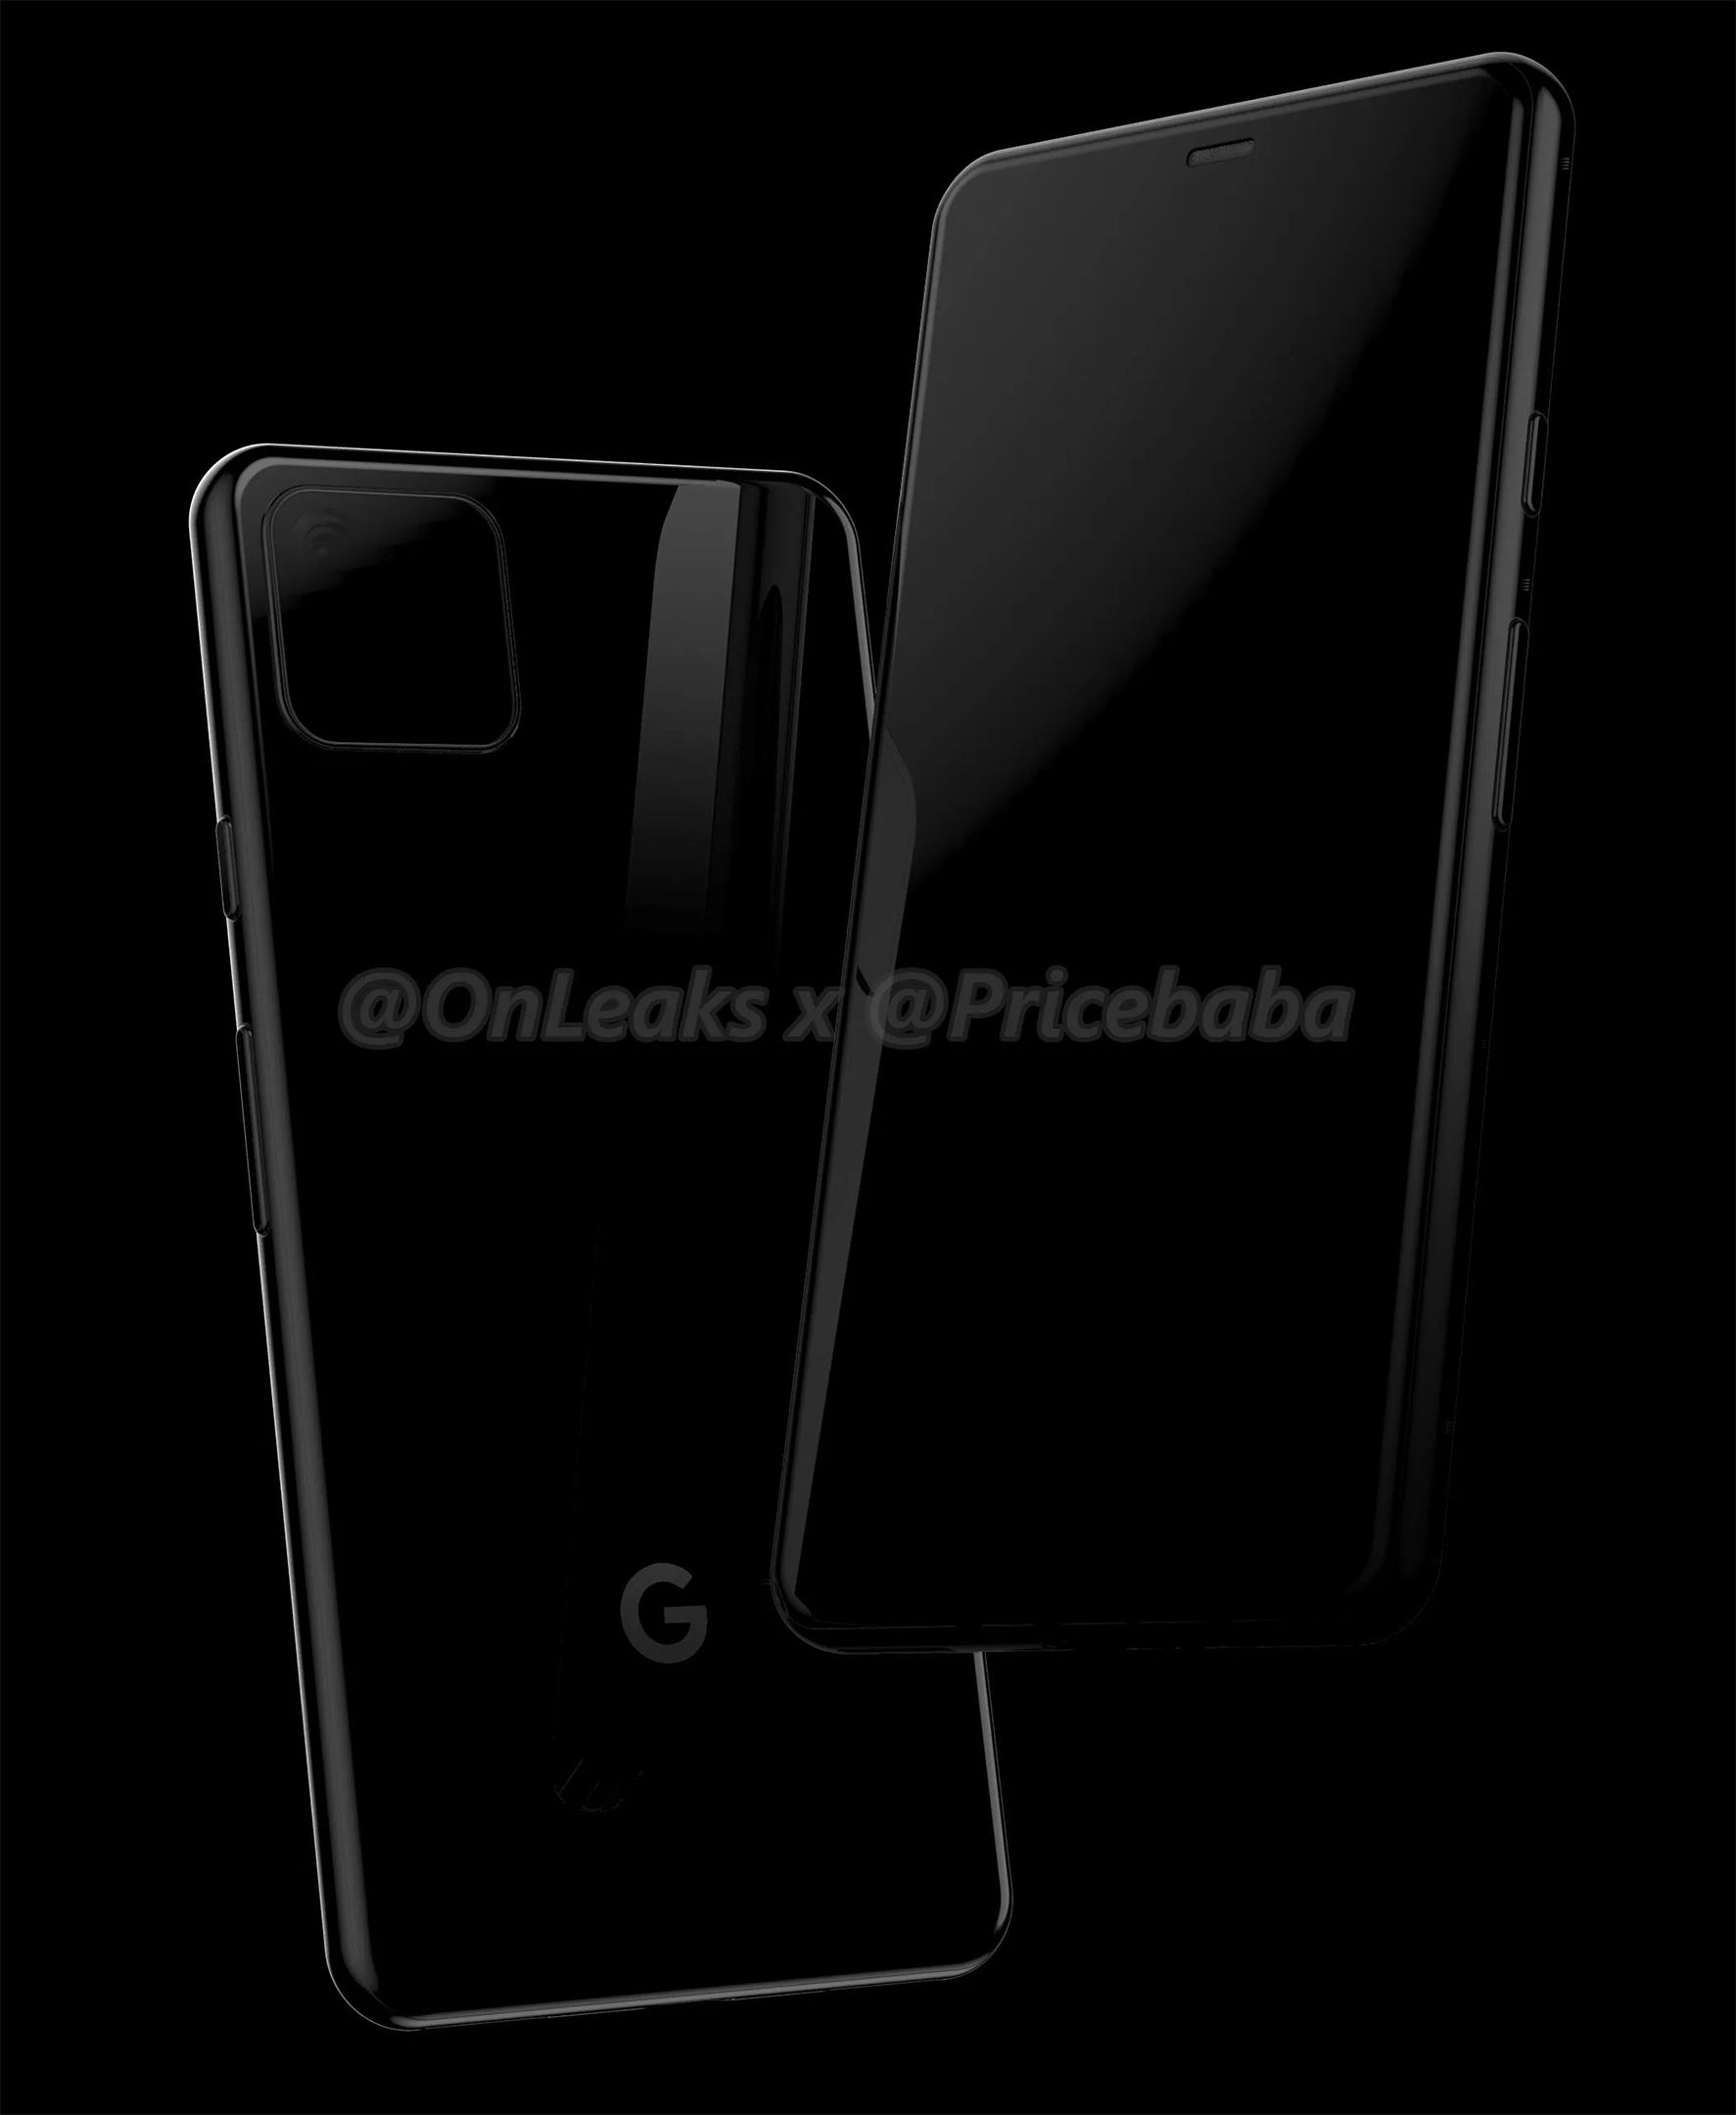 Google Pixel 4 render leak